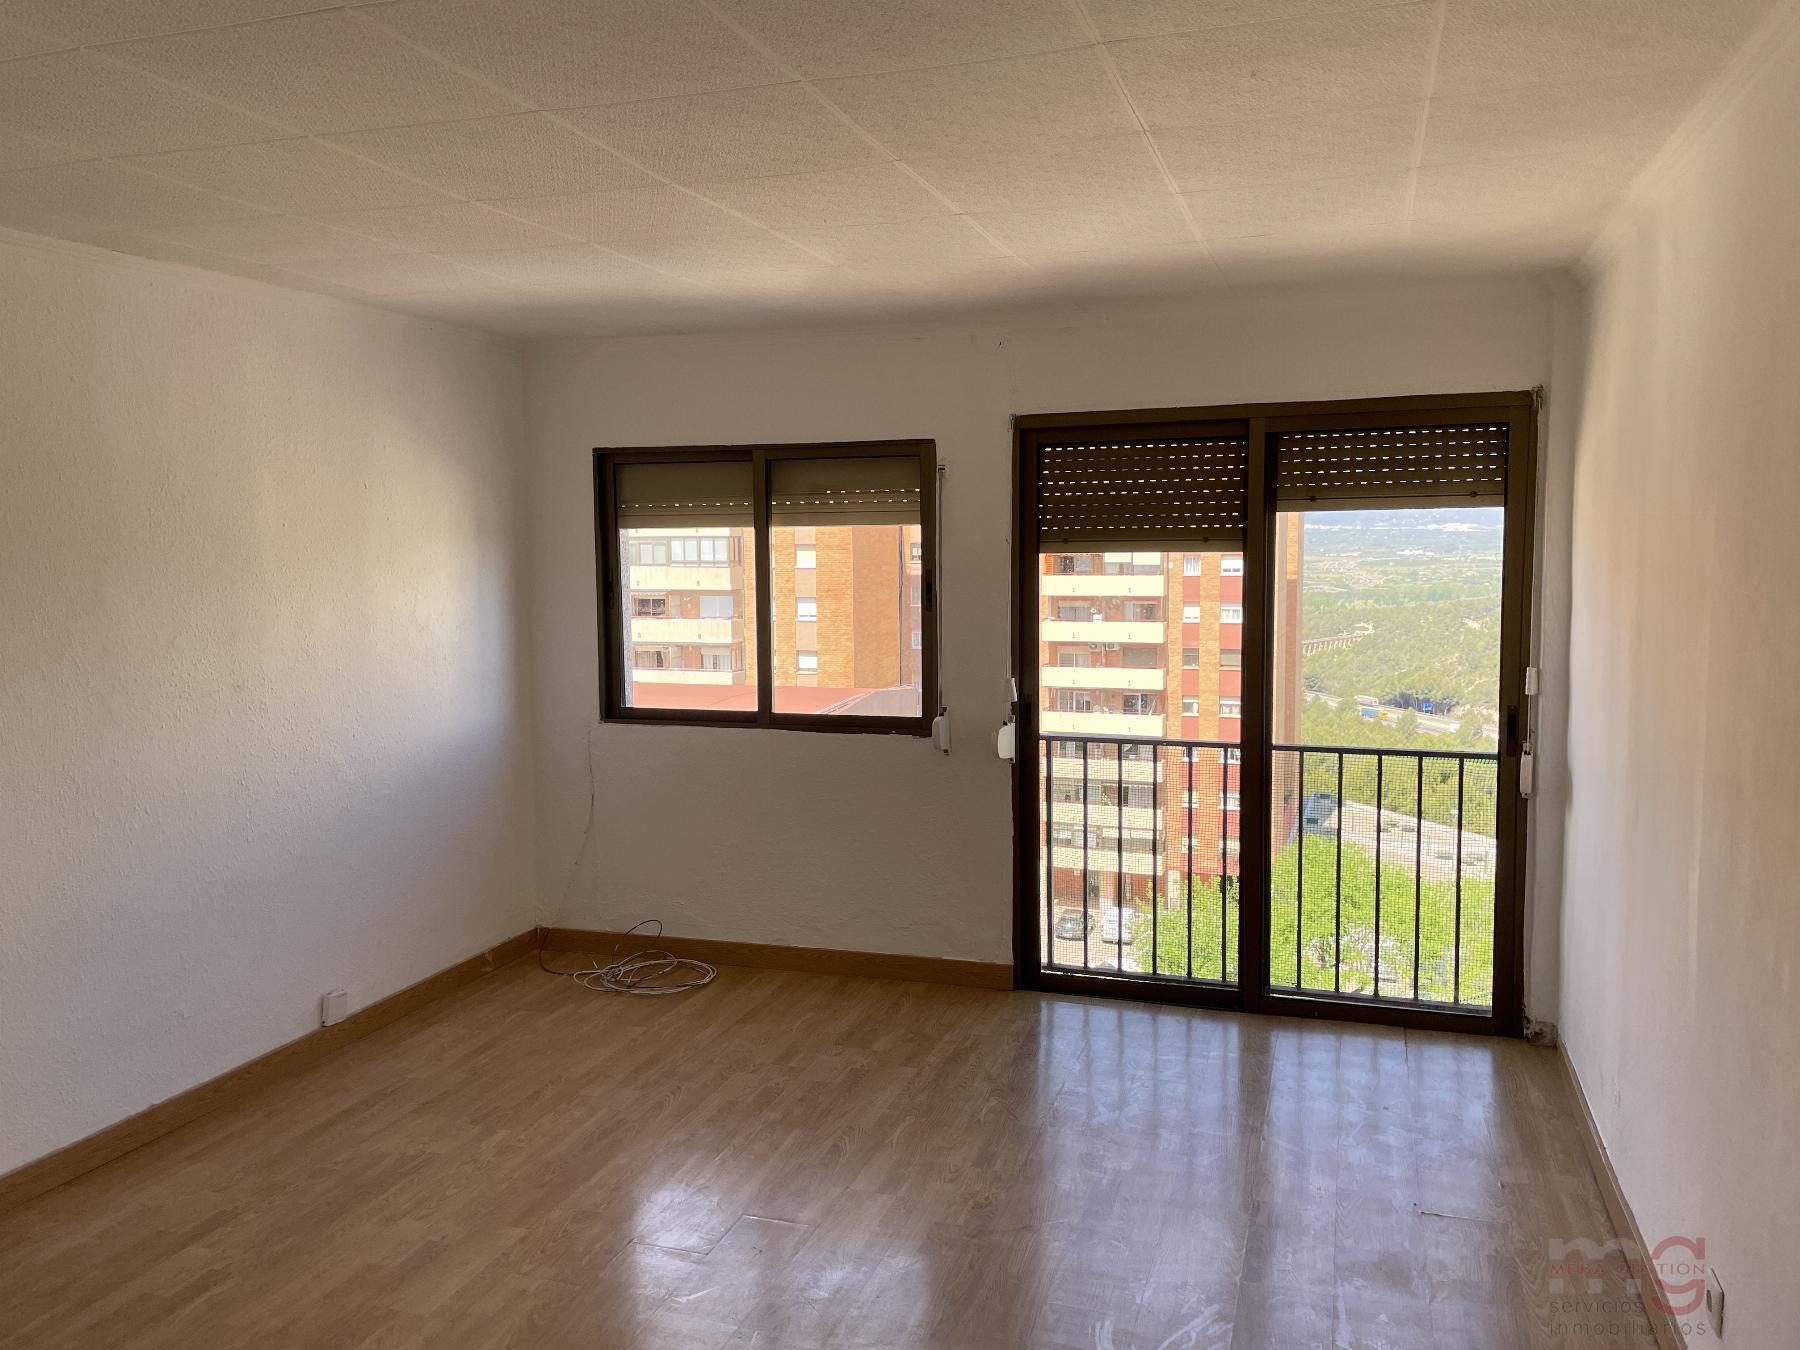 For sale of apartment in Tarragona